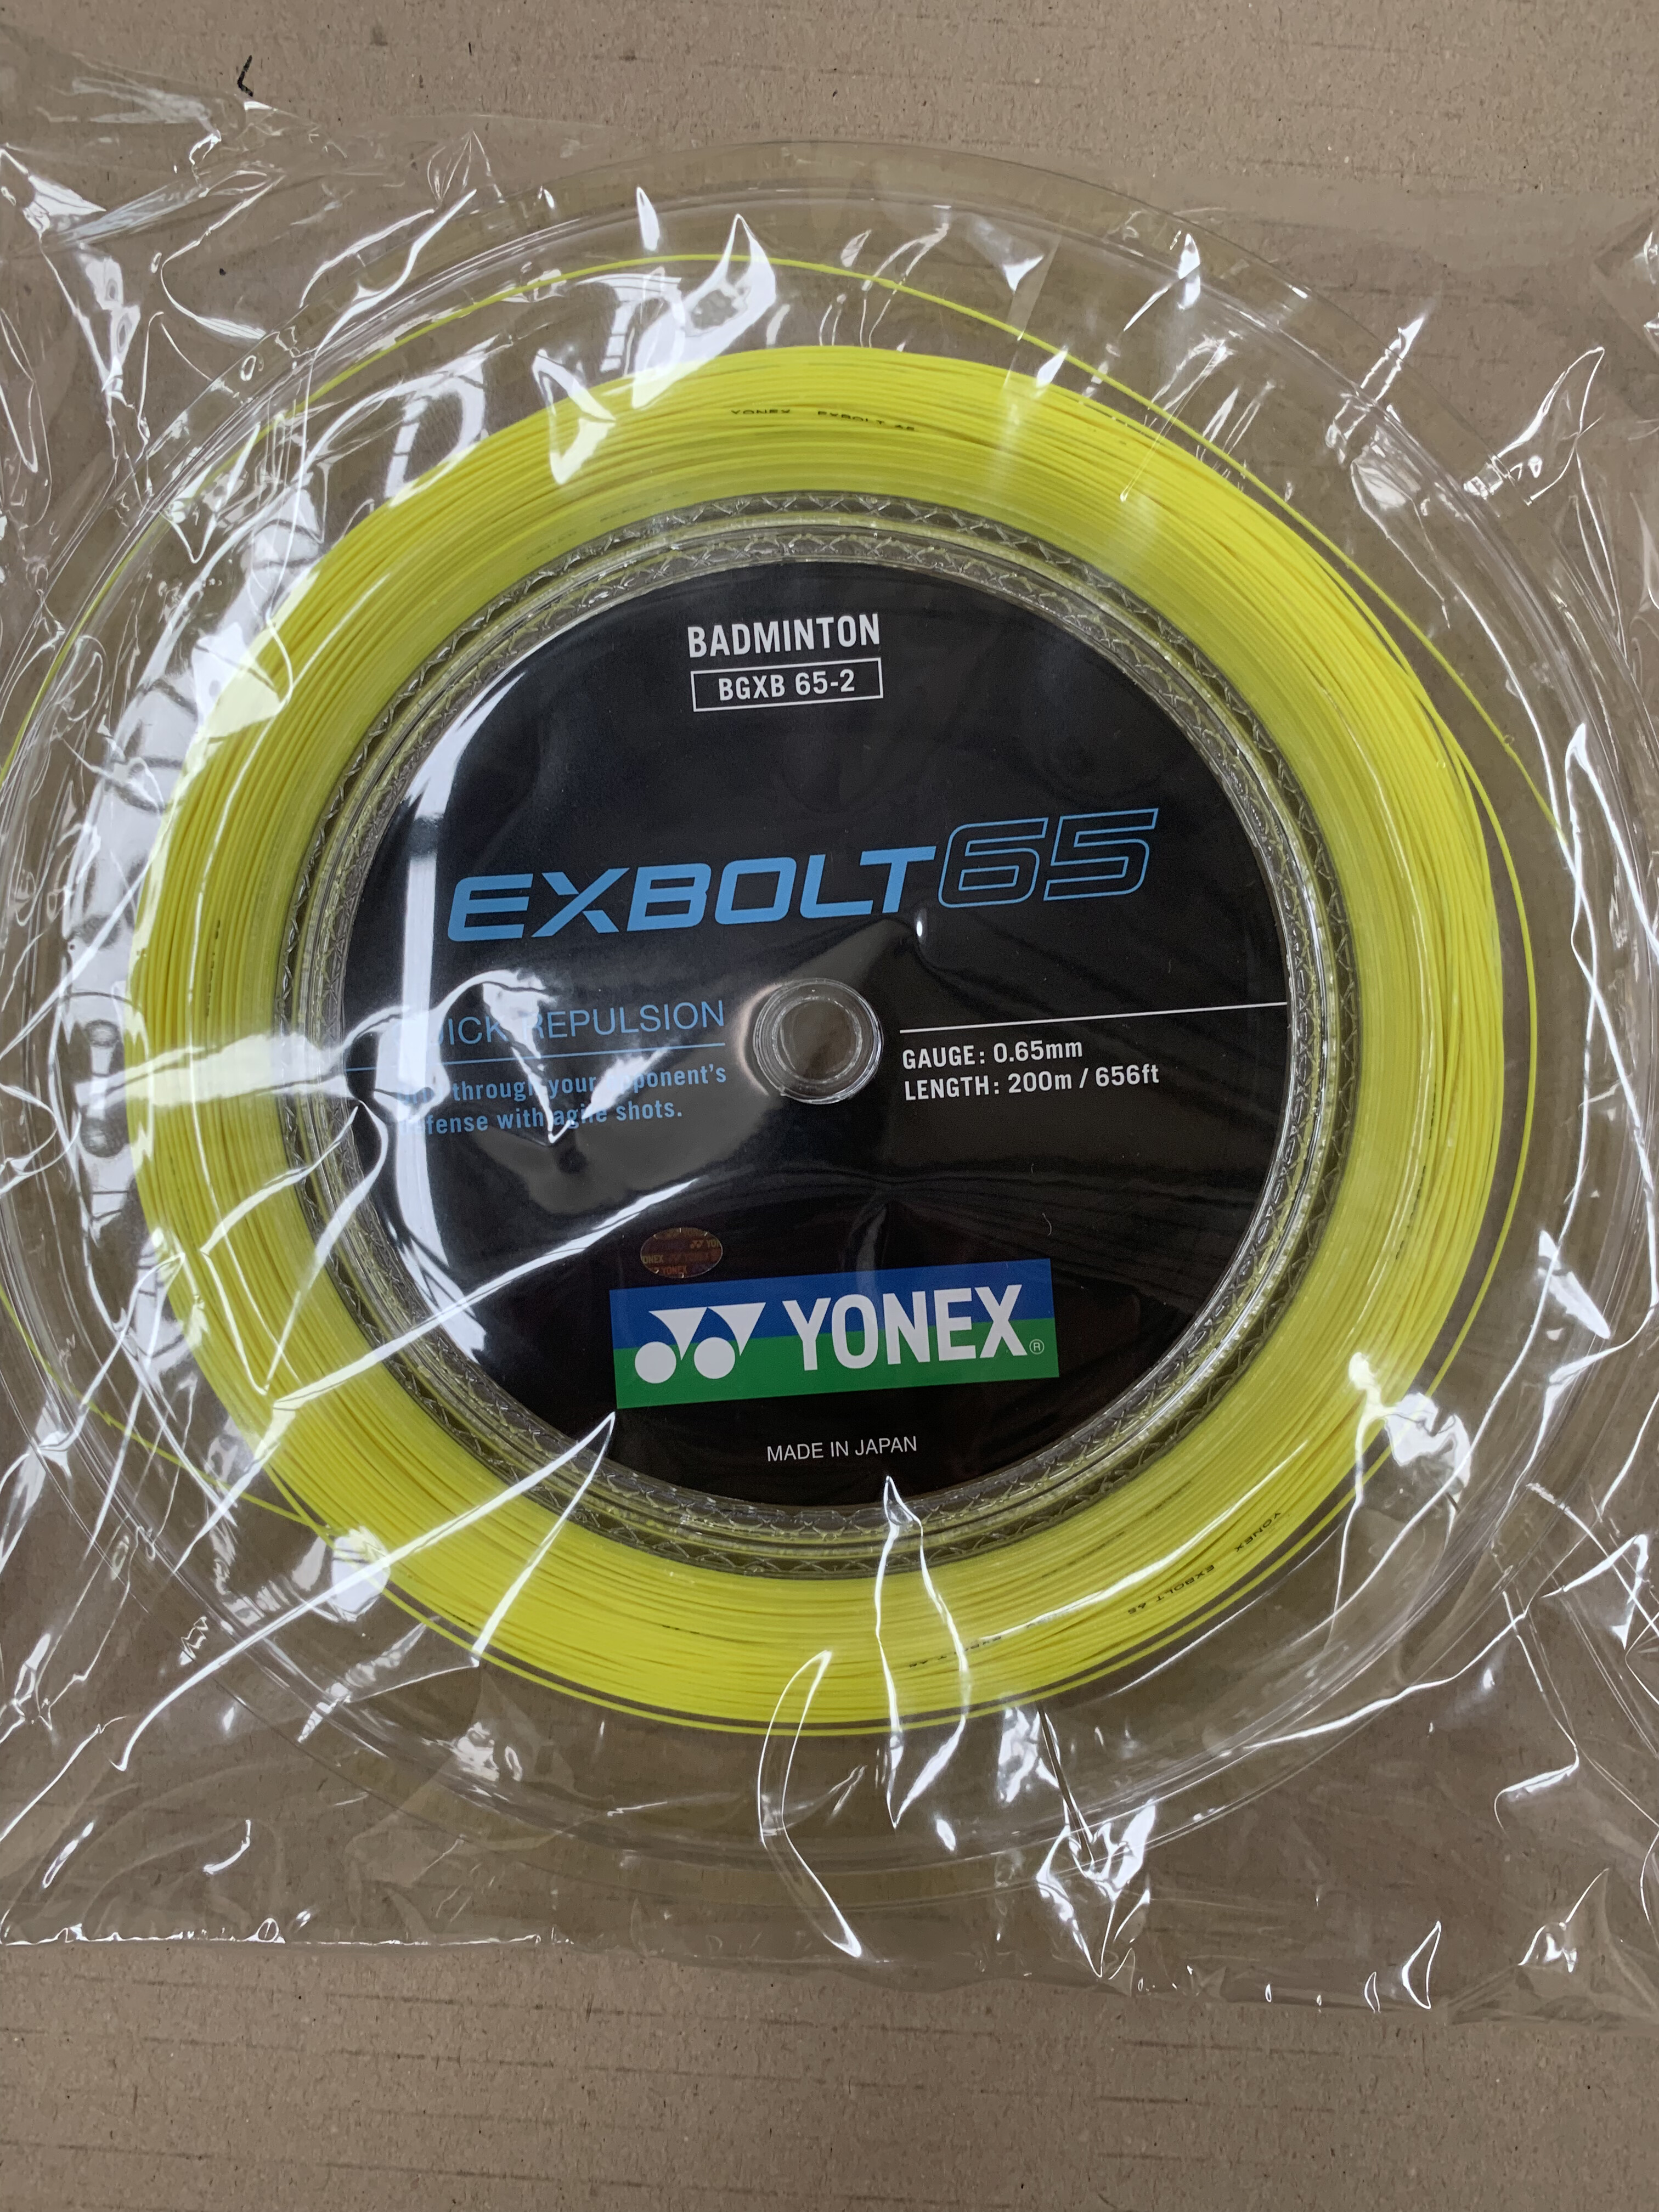 YONEX EXBOLT 65 String, 200 m Coil BGXB 65-2 Badminton String